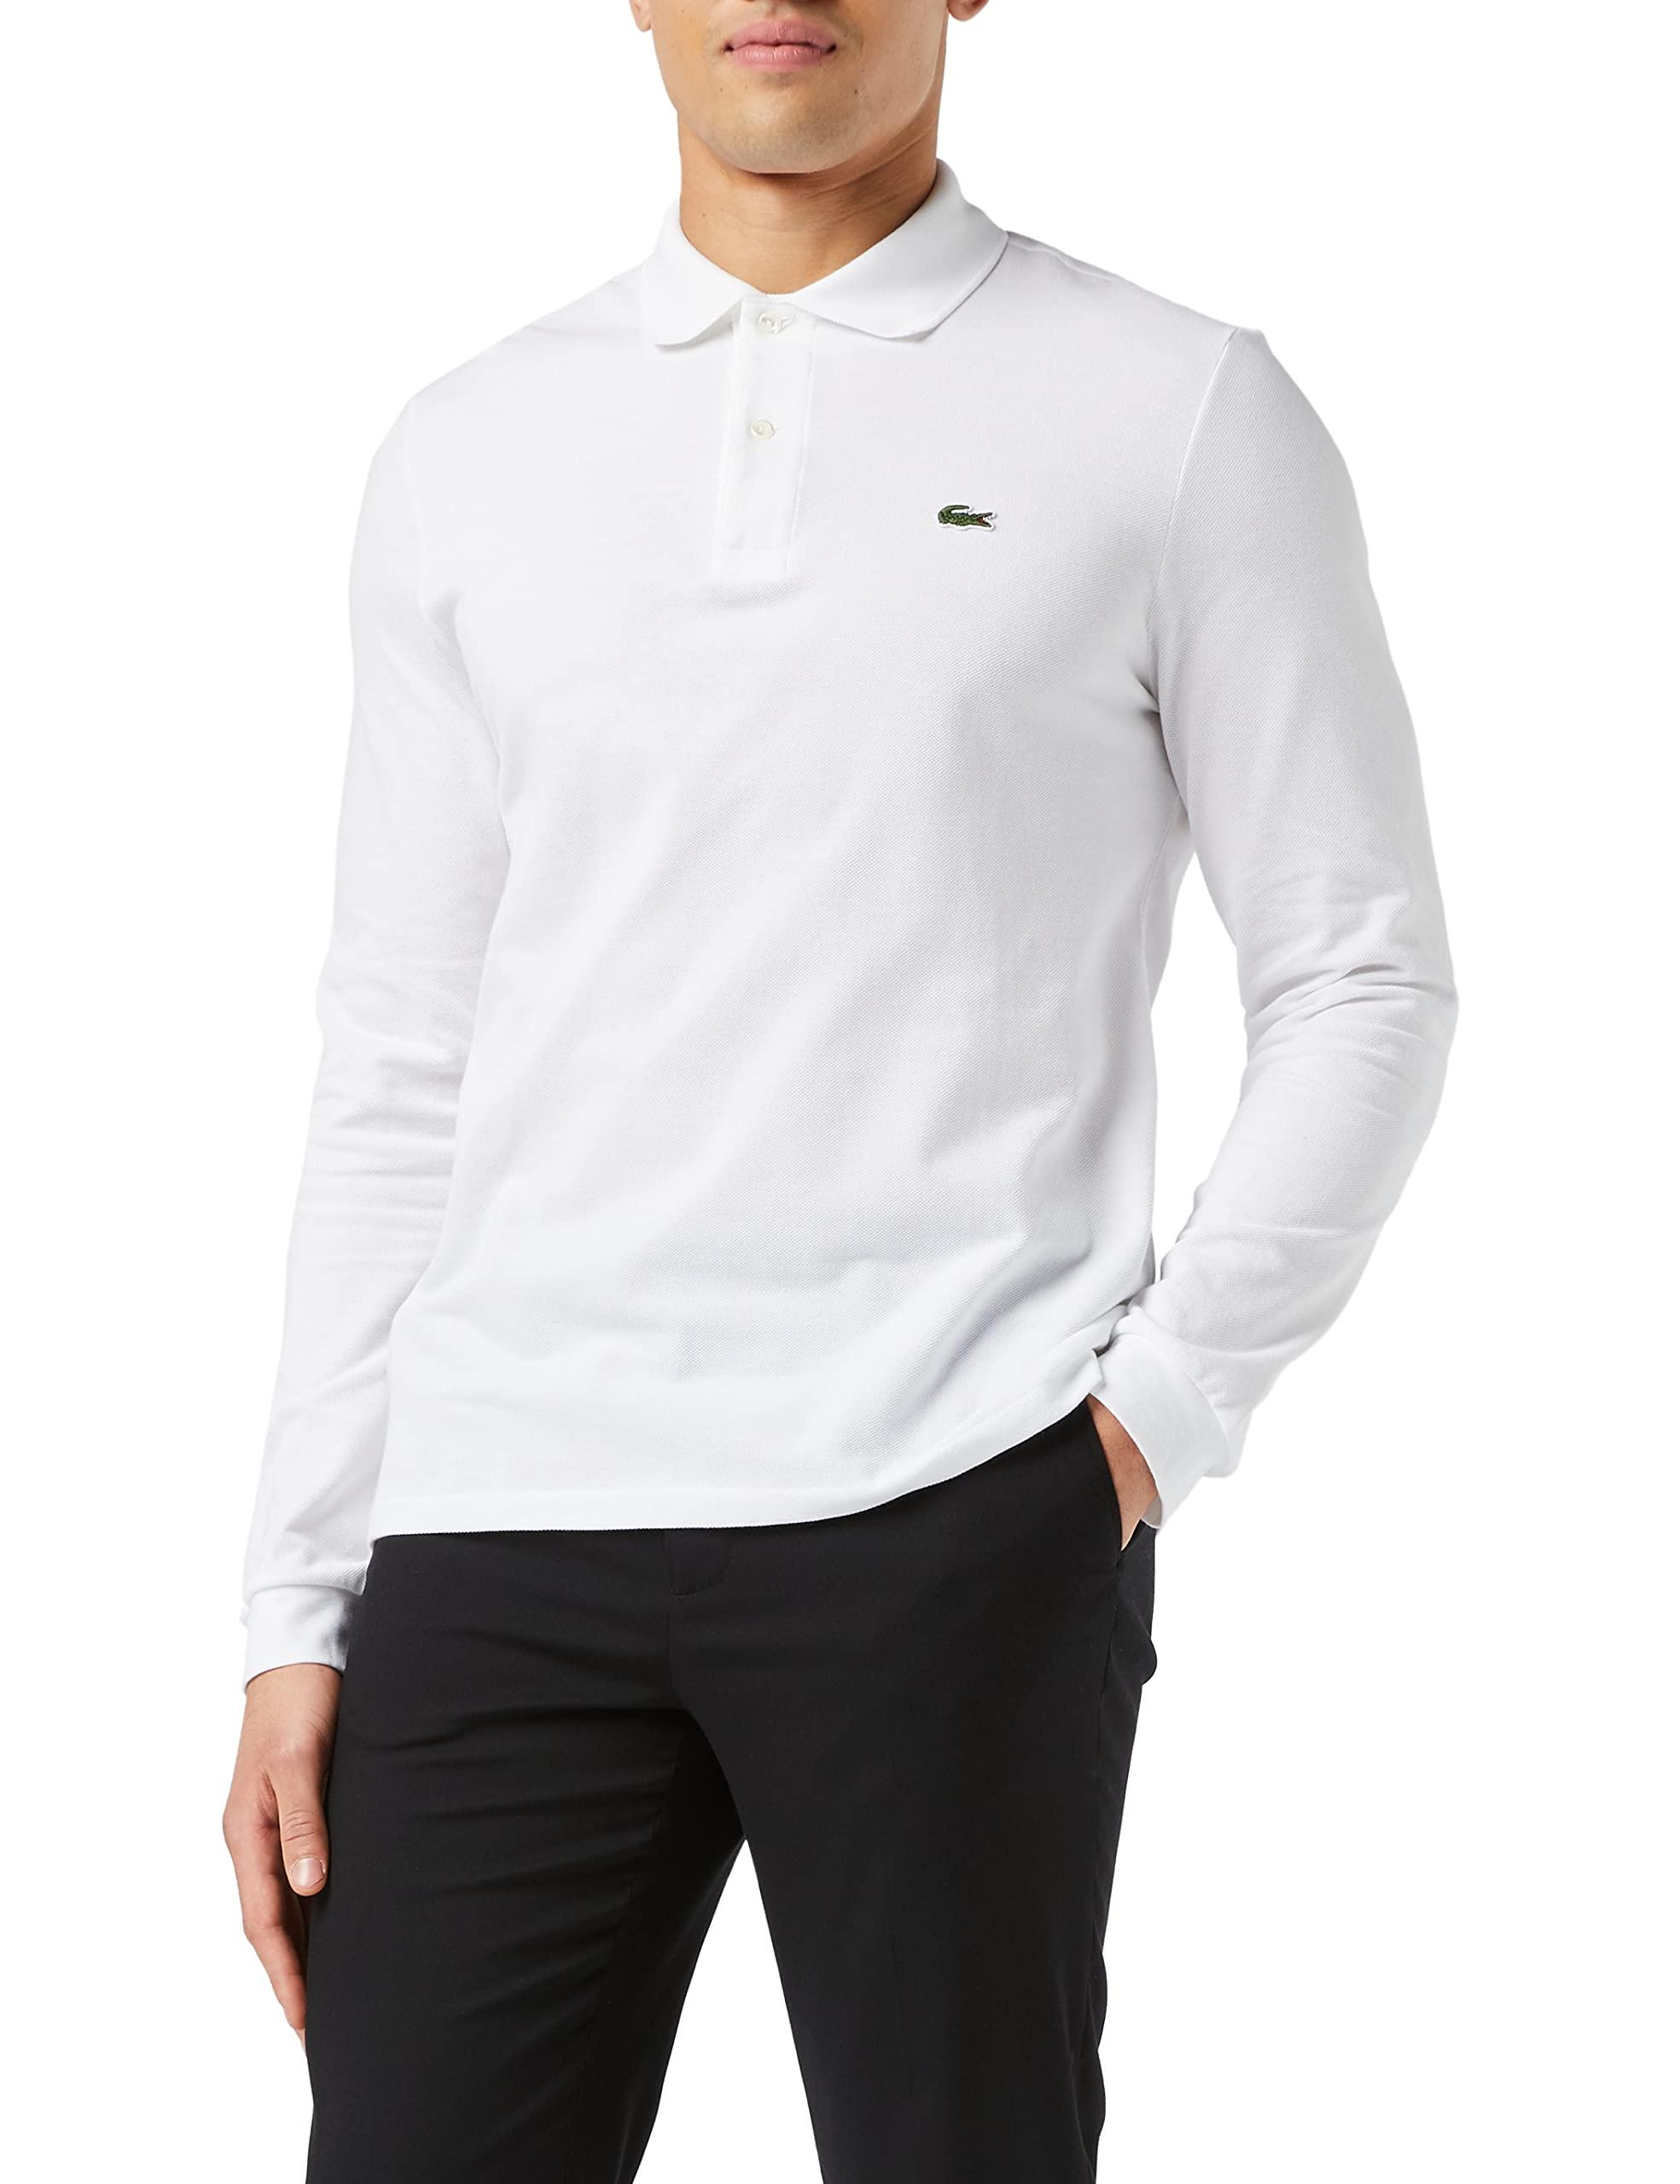 Lacoste Cotton Long Sleeve Classic Pique Polo Shirt in Bordeaux (White) for  Men - Save 23% - Lyst